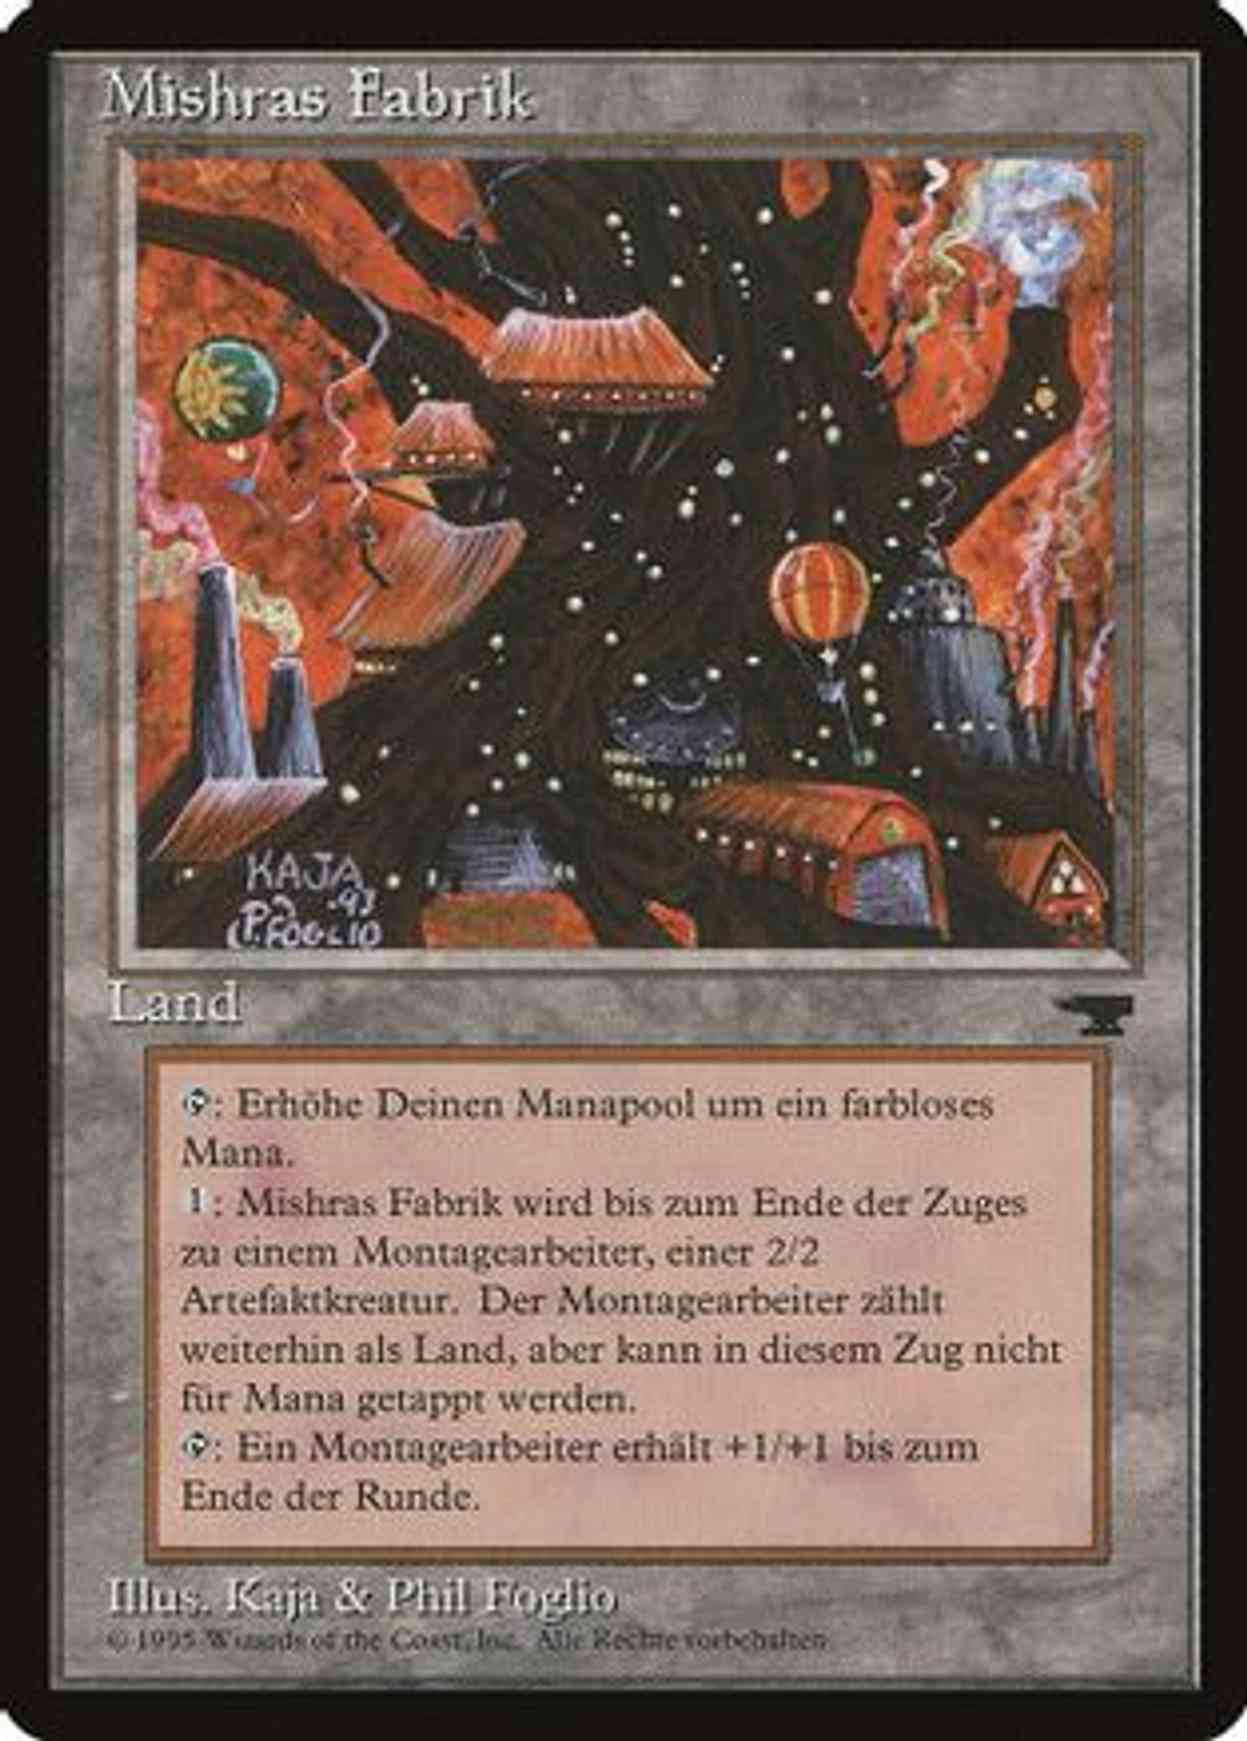 Mishra's Factory (German) - "Mishras Fabrik" magic card front